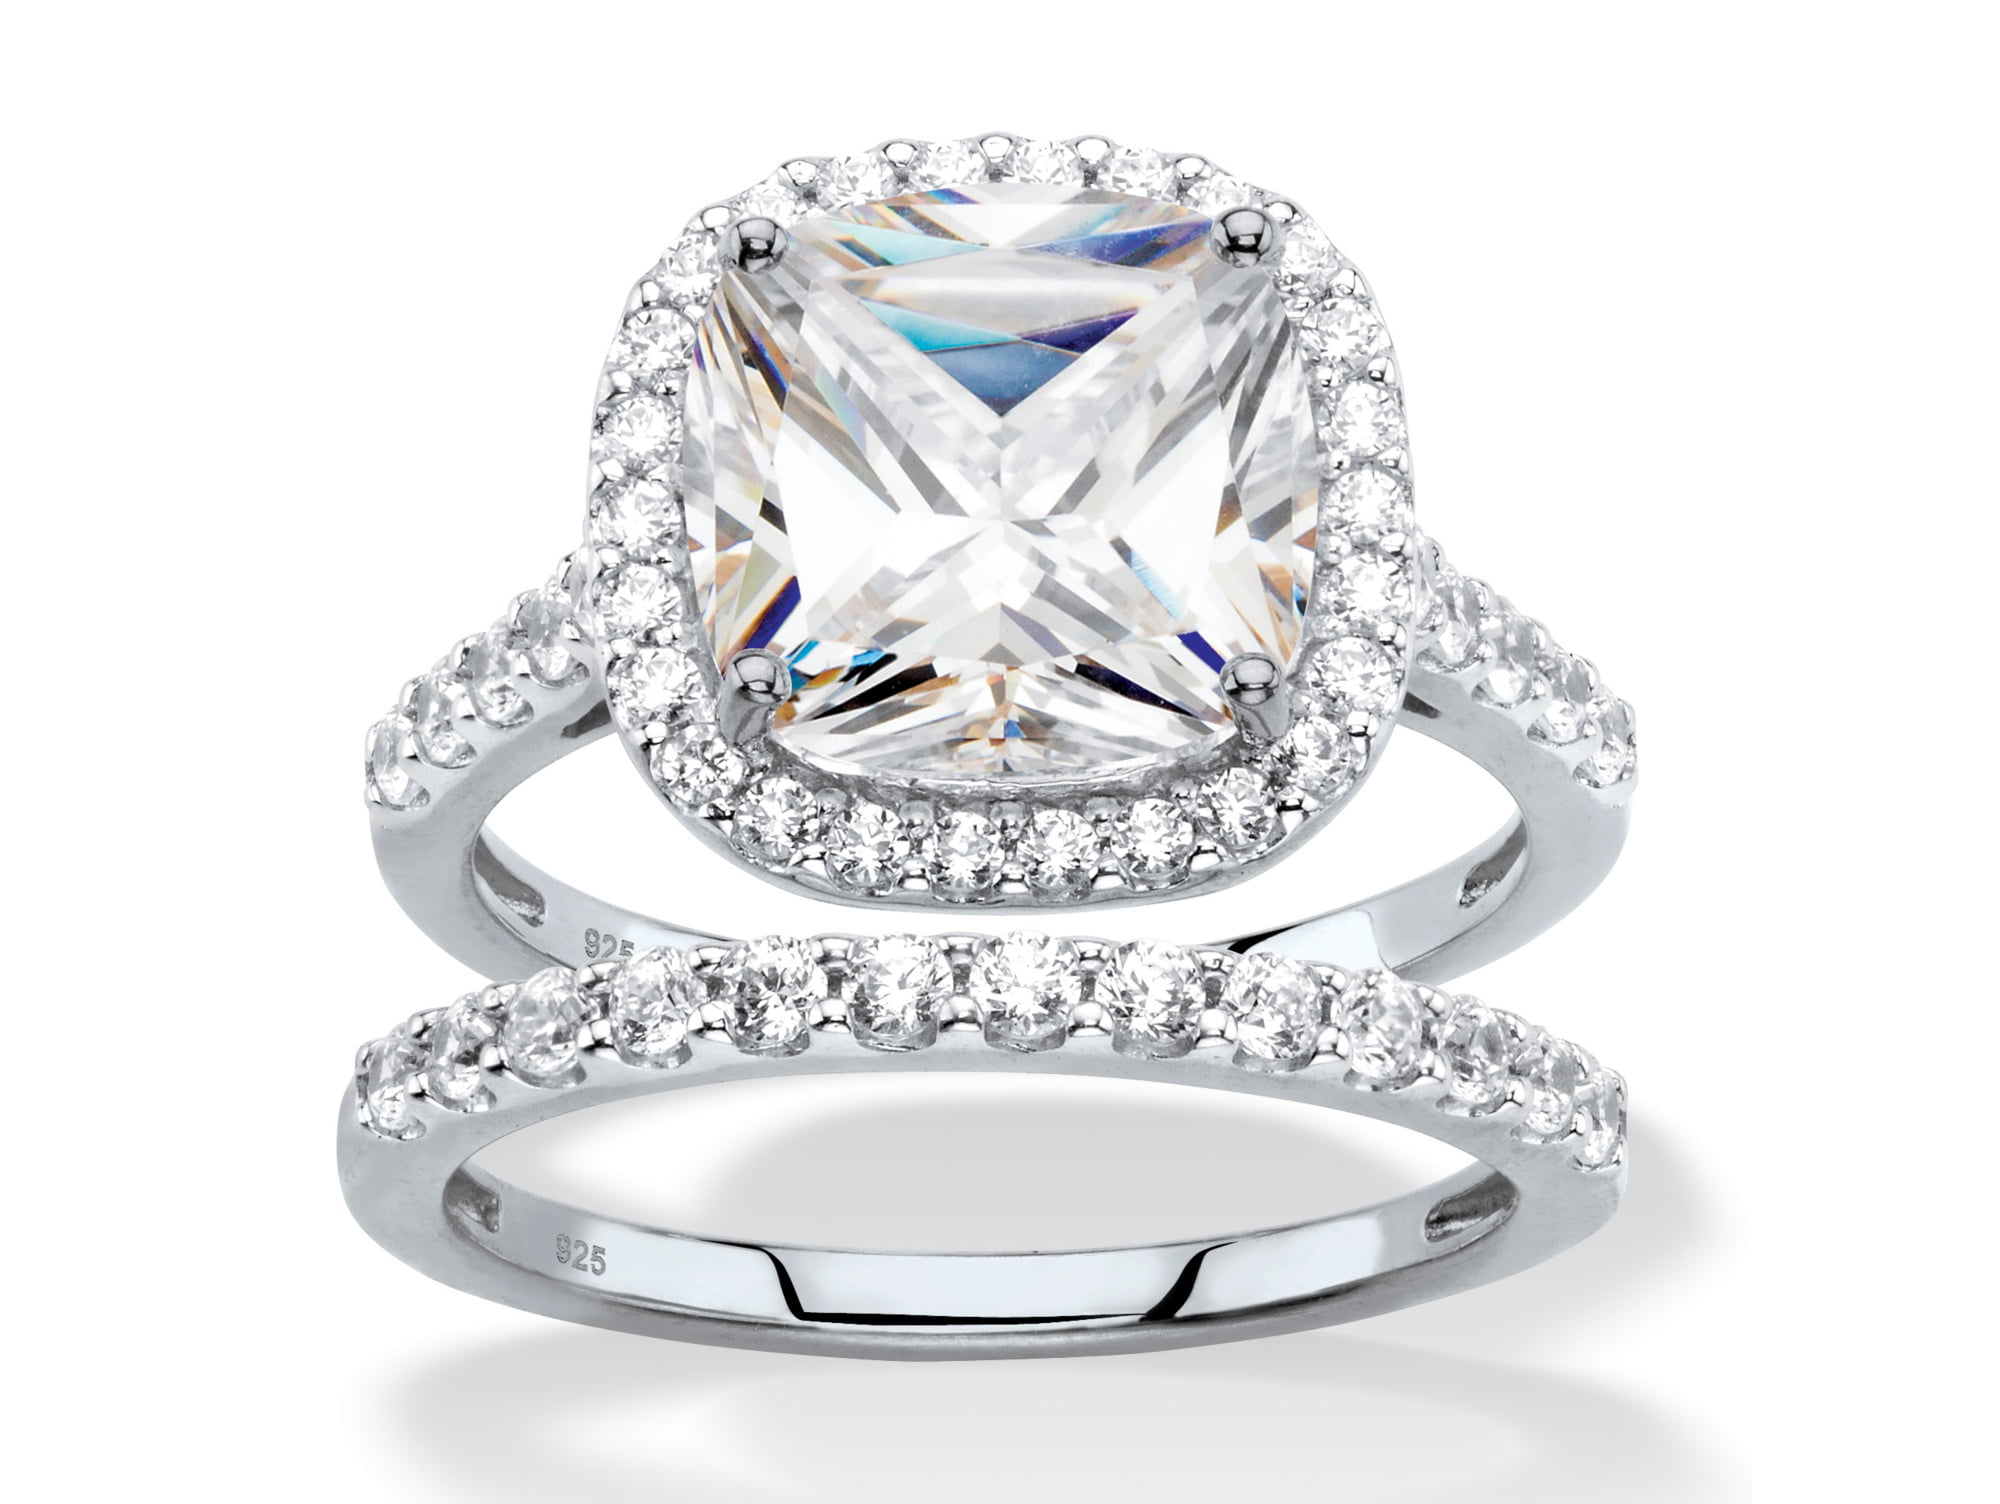 Cubic Zirconia Wedding Rings That Look Real - Wedding Rings Sets Ideas